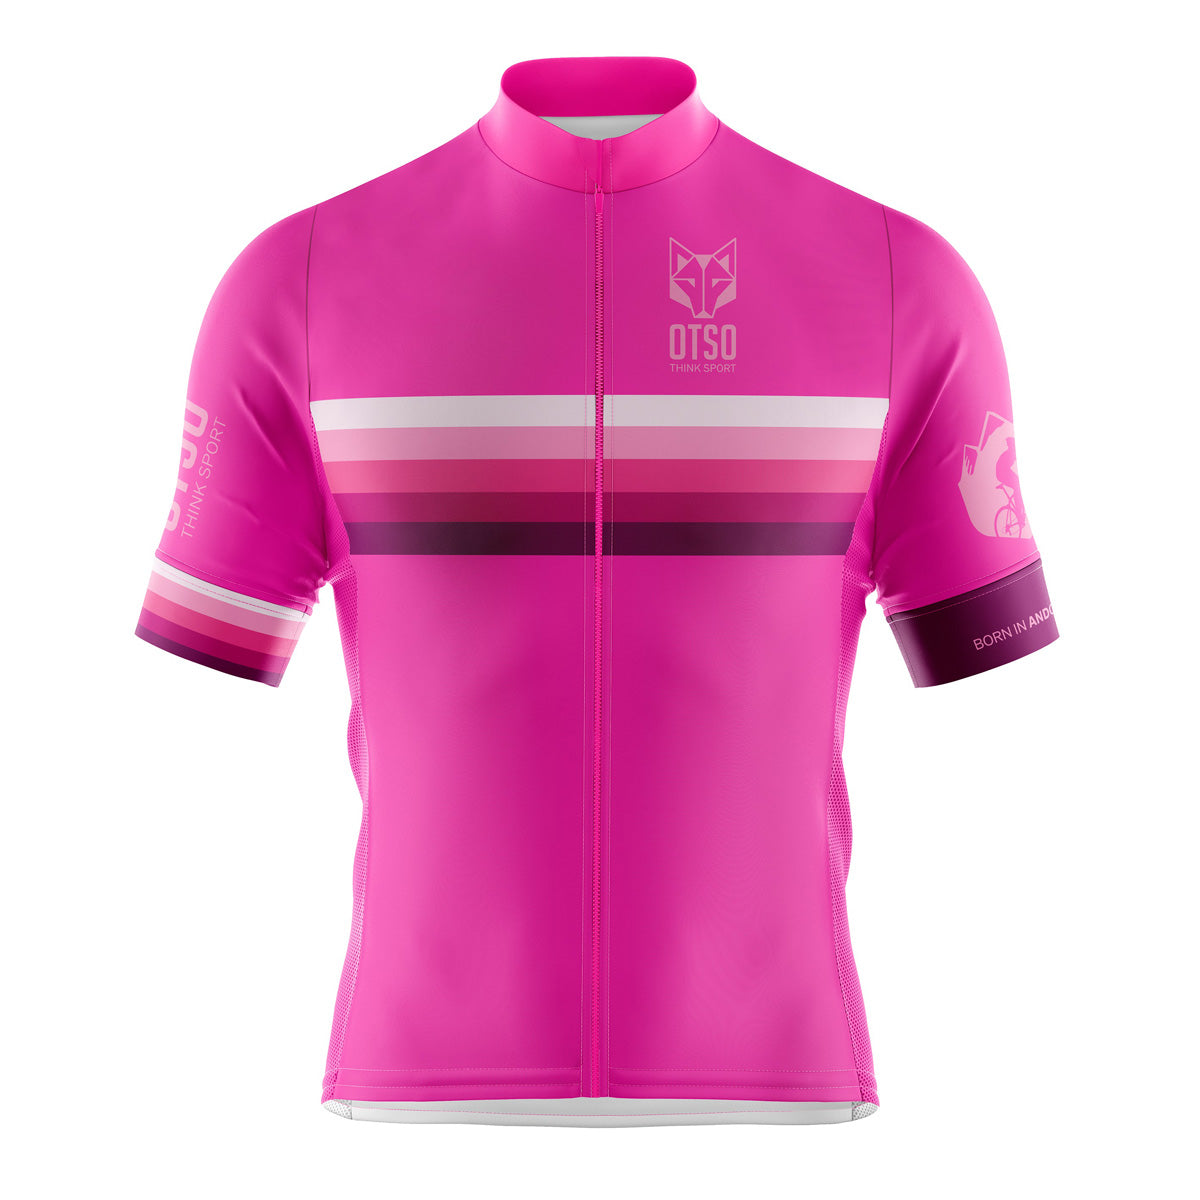 Mallot de ciclisme màniga curta home - Stripes Fluo Pink (Outlet)